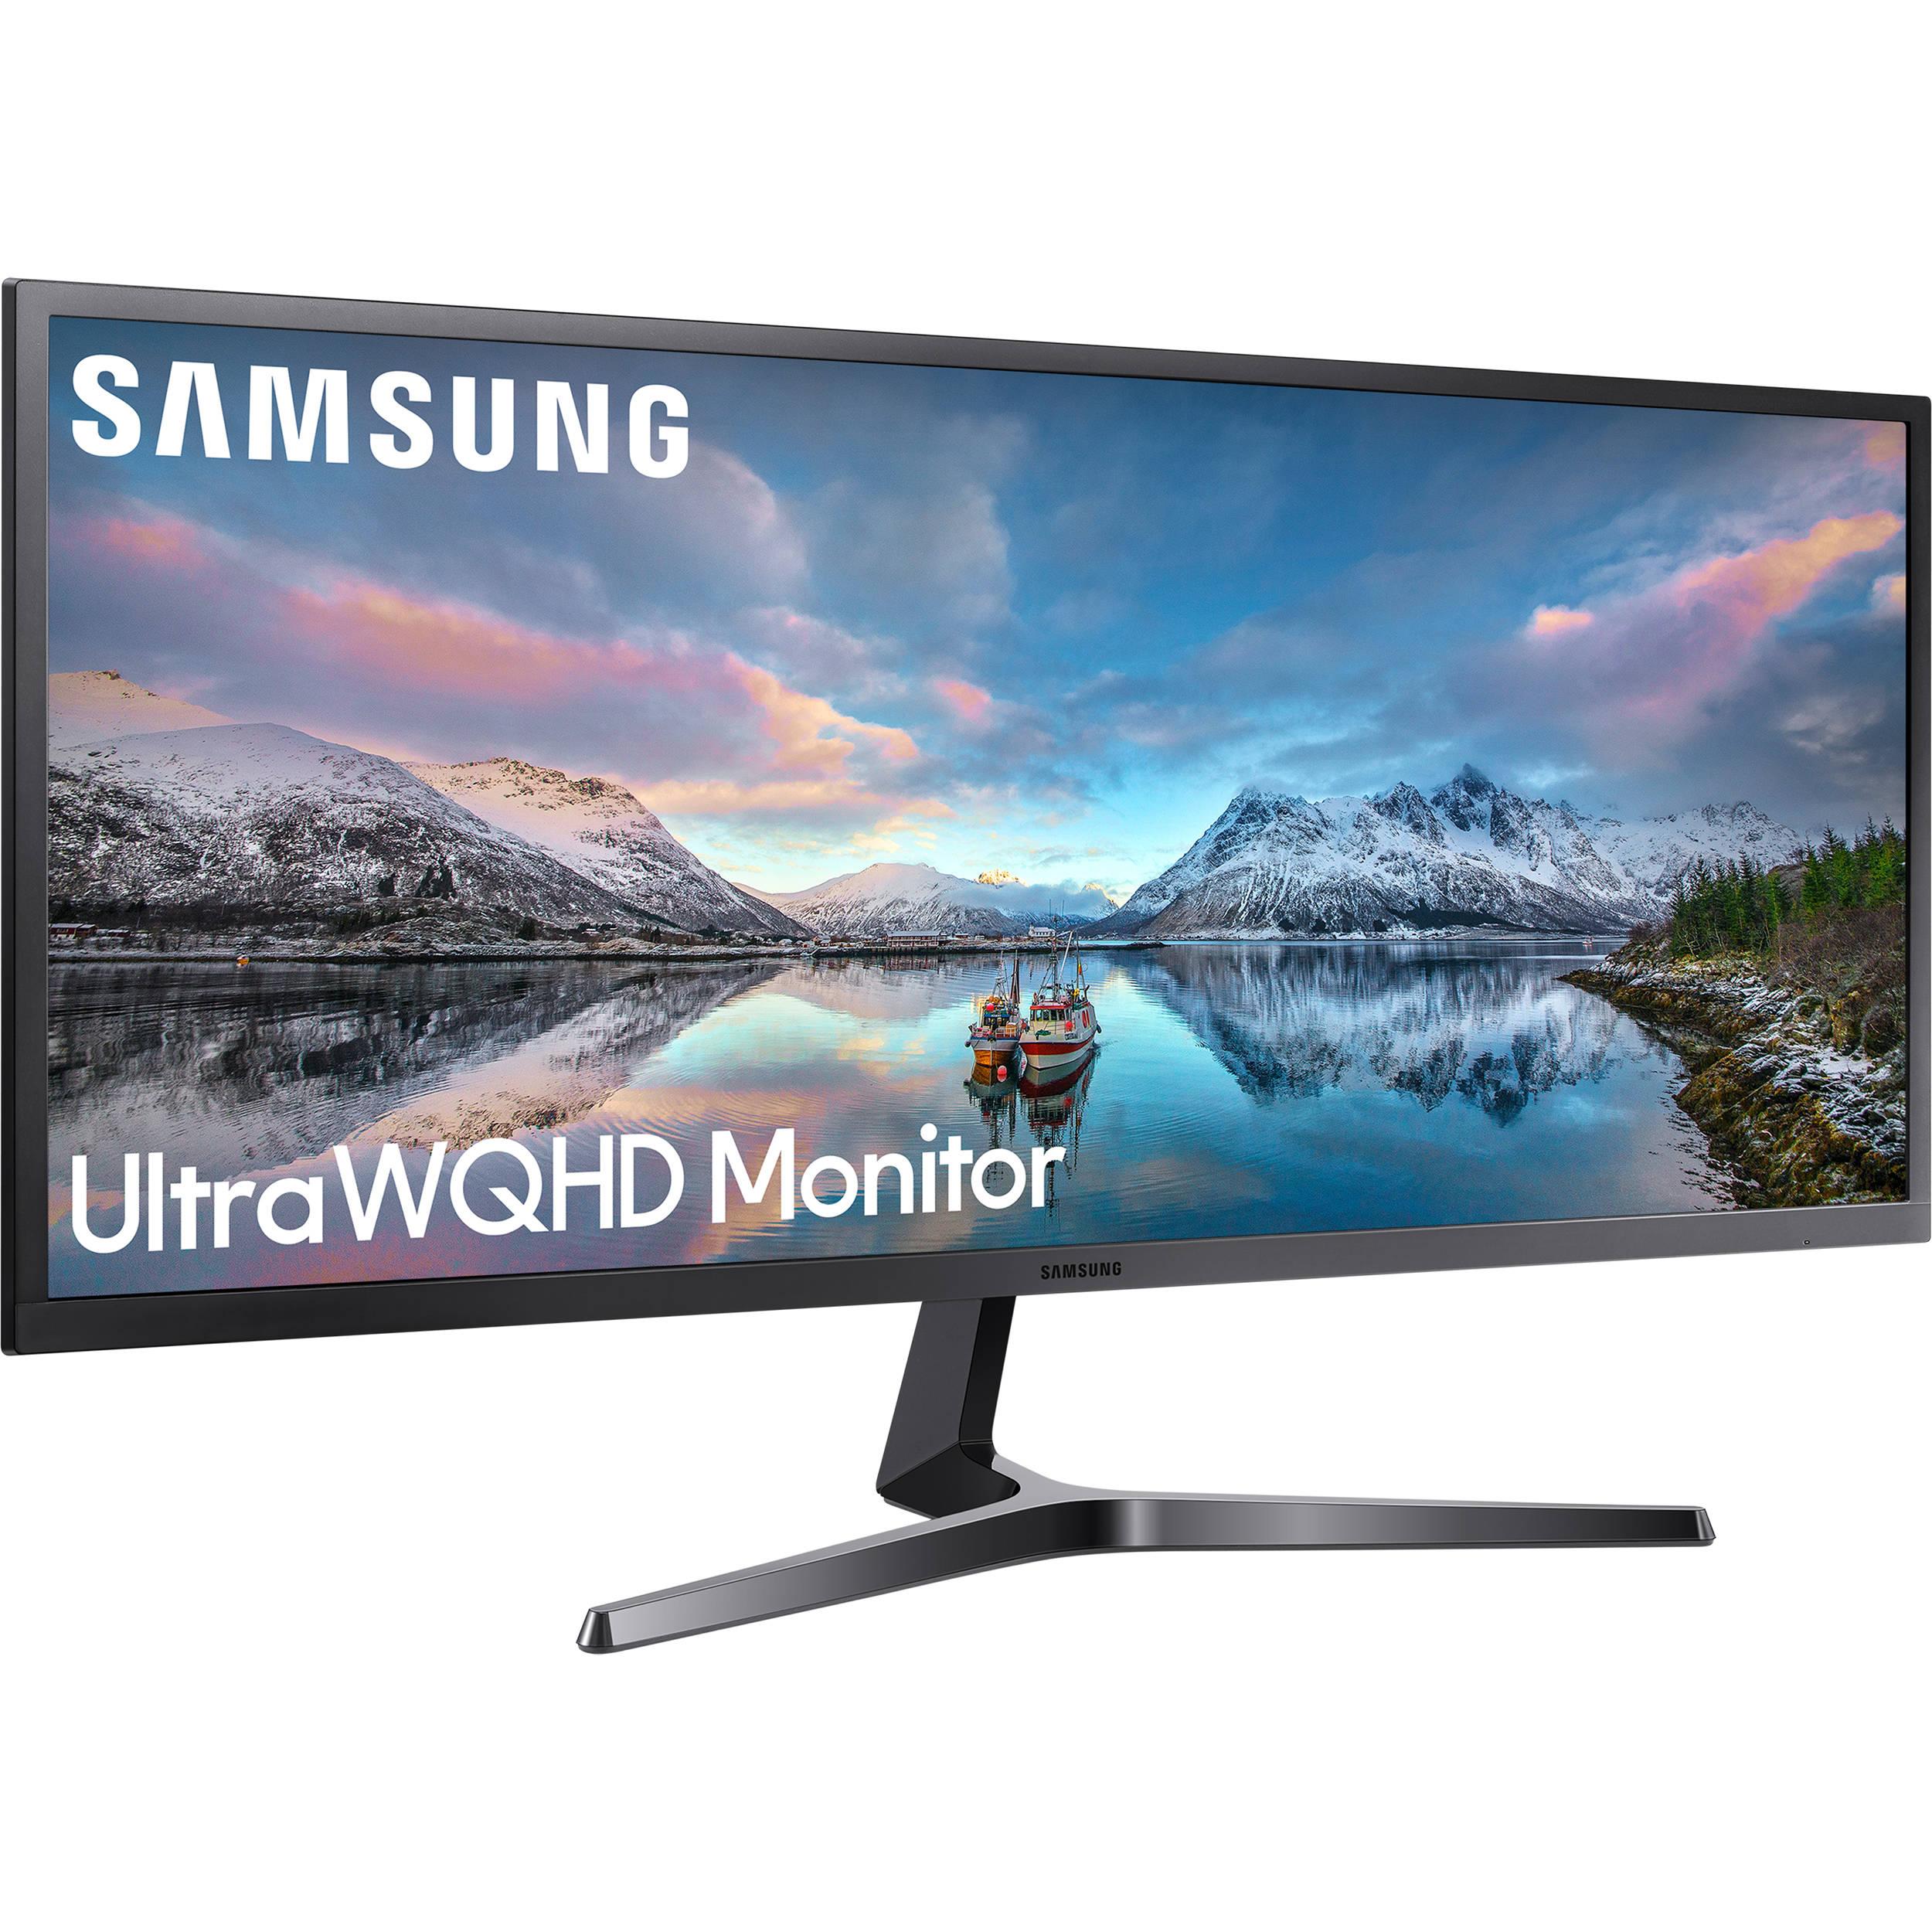 34in Samsung UlraWide VA Monitor for $199.99